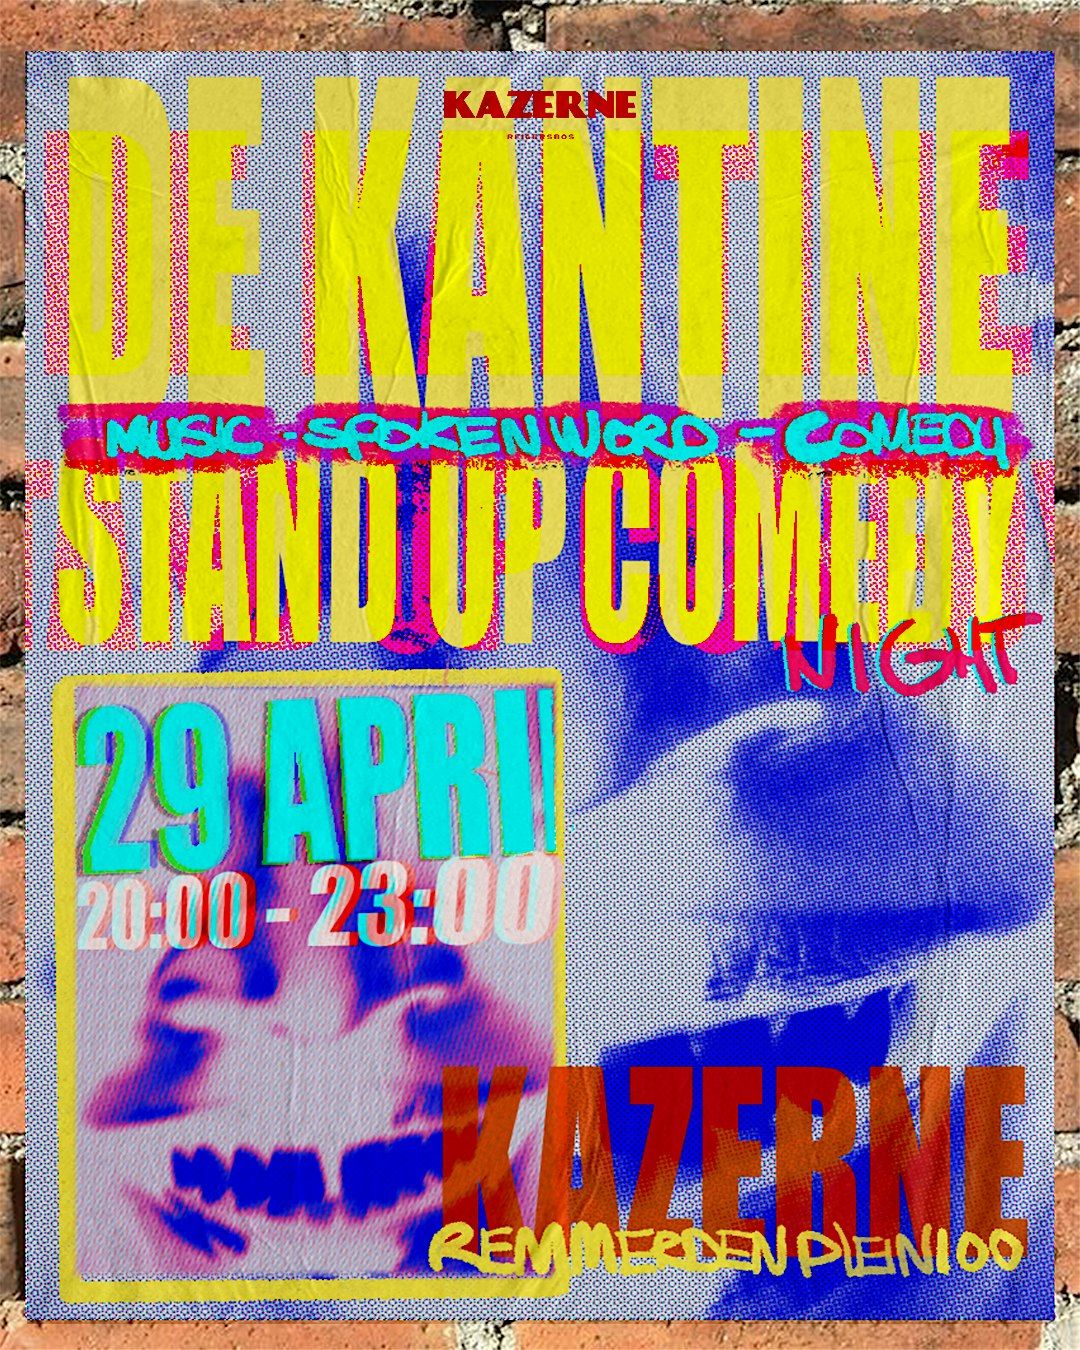 De Kantine: Stand up comedy night